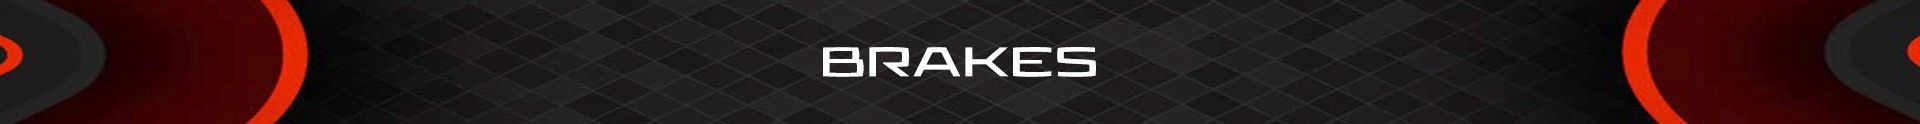 brakes category